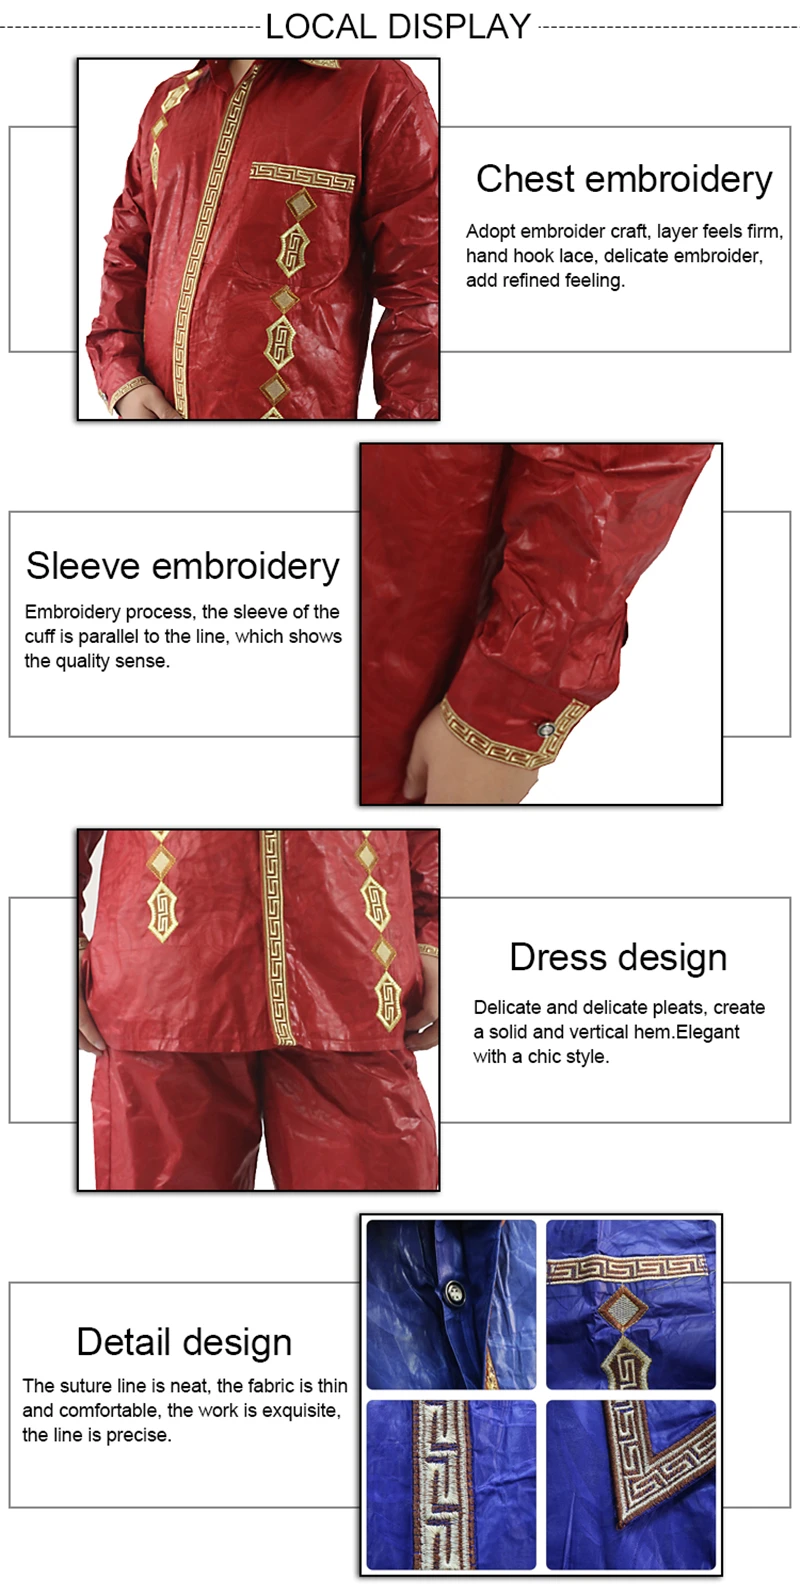 MD Африка для мужчин Базен riche Костюмы Рубашки-Дашики и брюки комплект из 2 предметов в африканском стиле рубашка с длинными рукавами